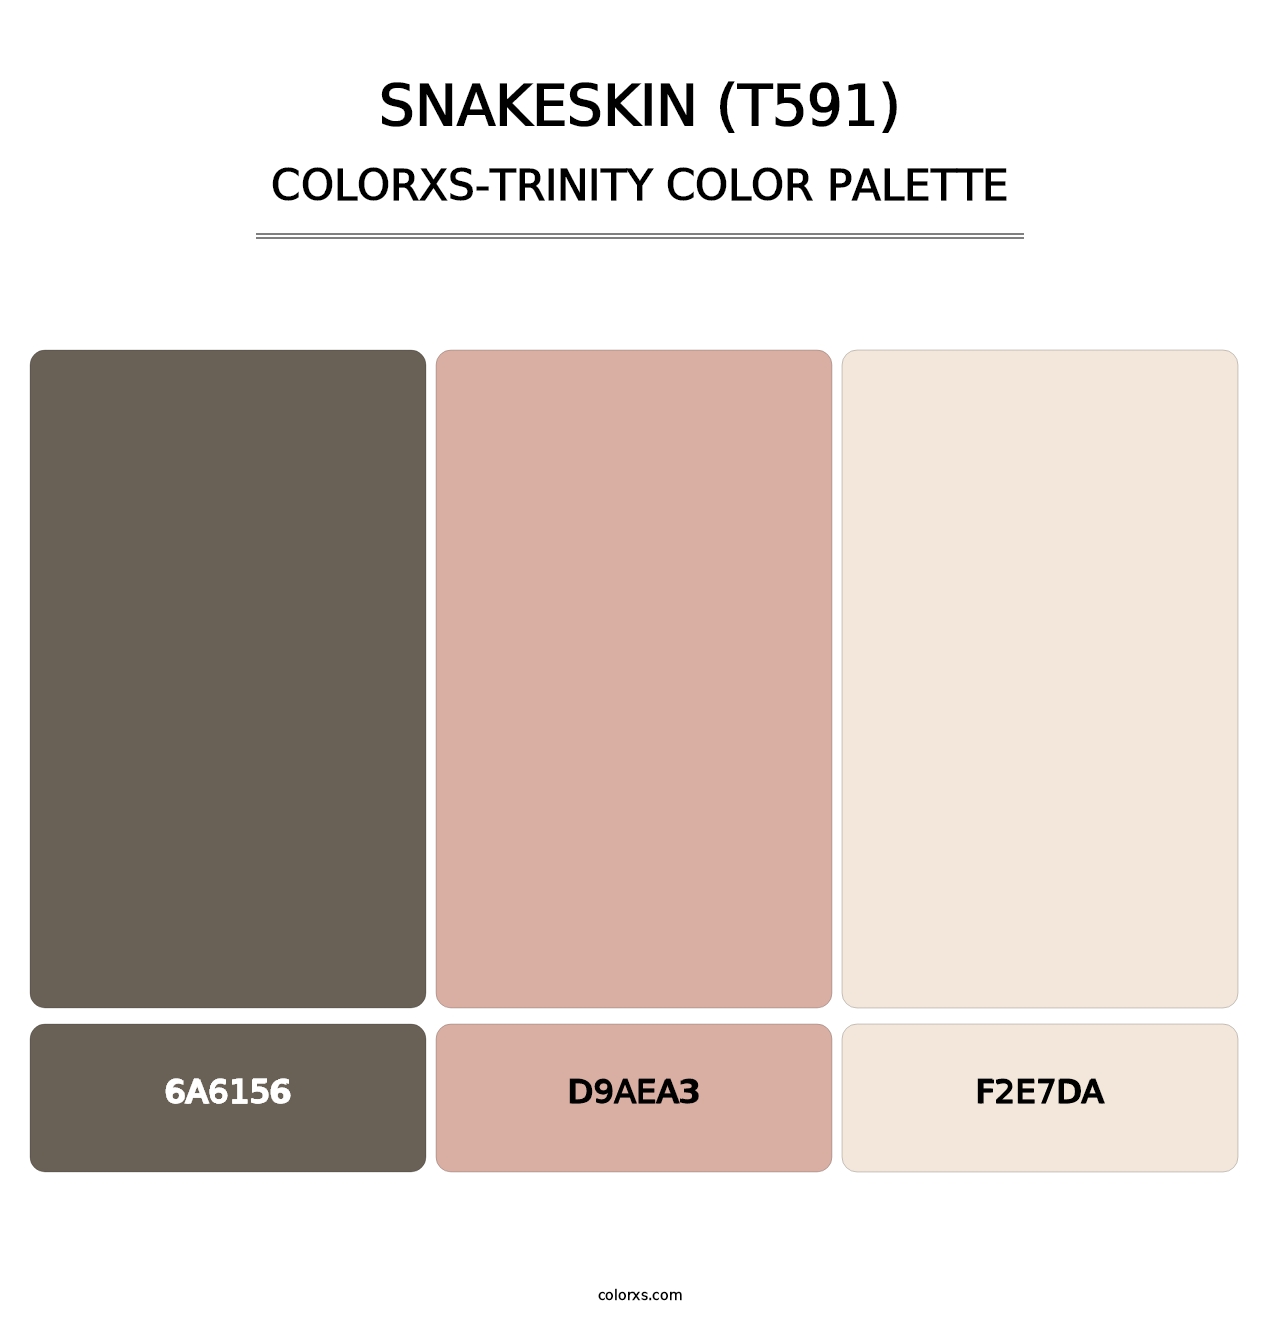 Snakeskin (T591) - Colorxs Trinity Palette